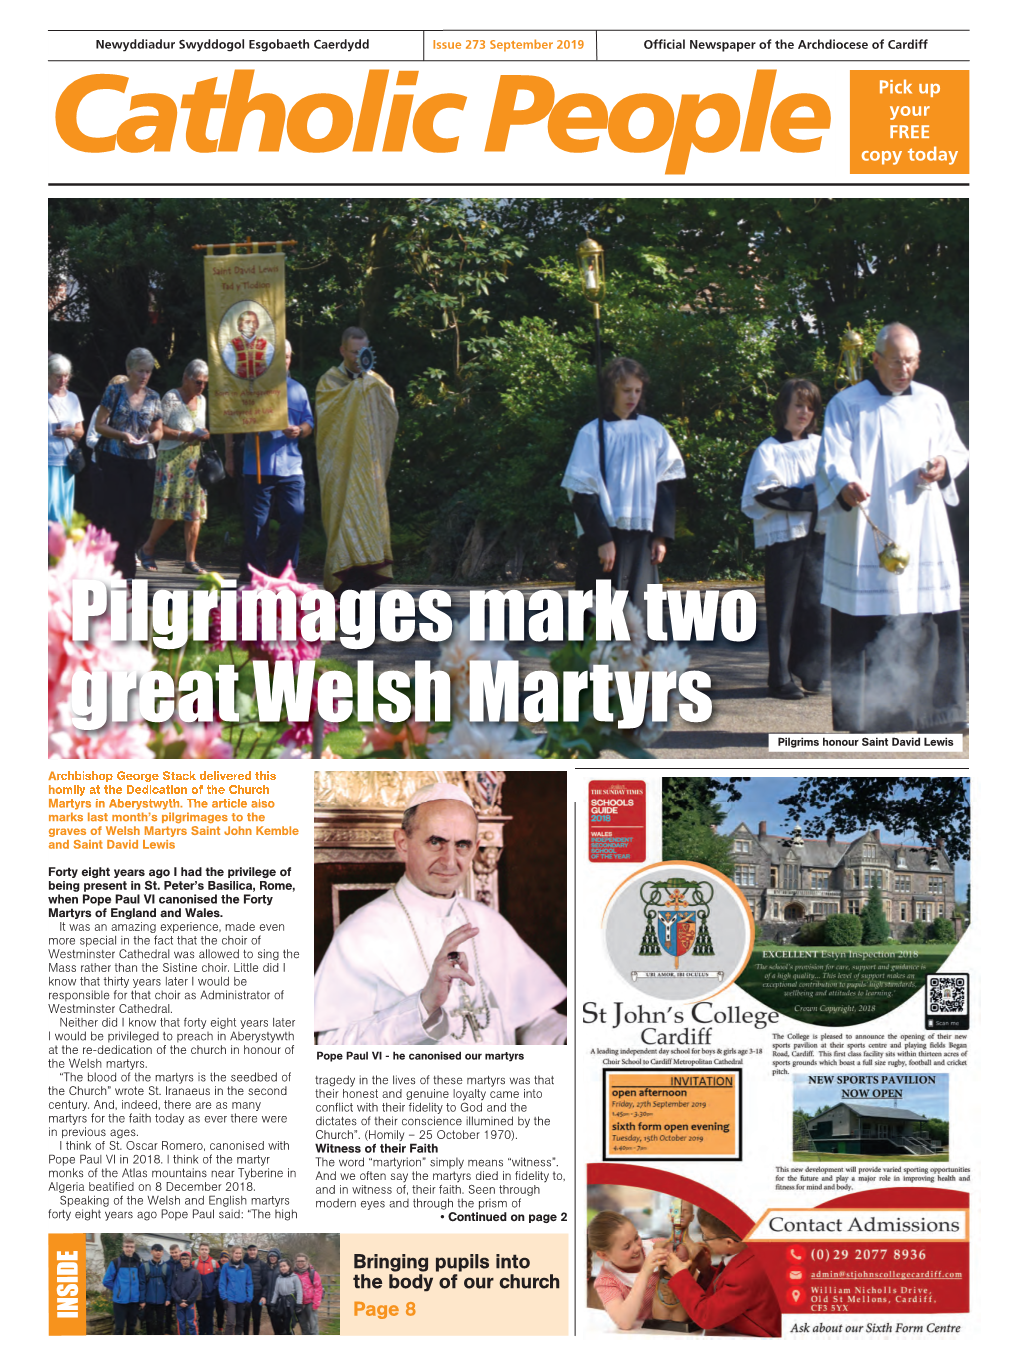 Pilgrimages Mark Two Great Welsh Martyrs Pilgrims Honour Saint David Lewis